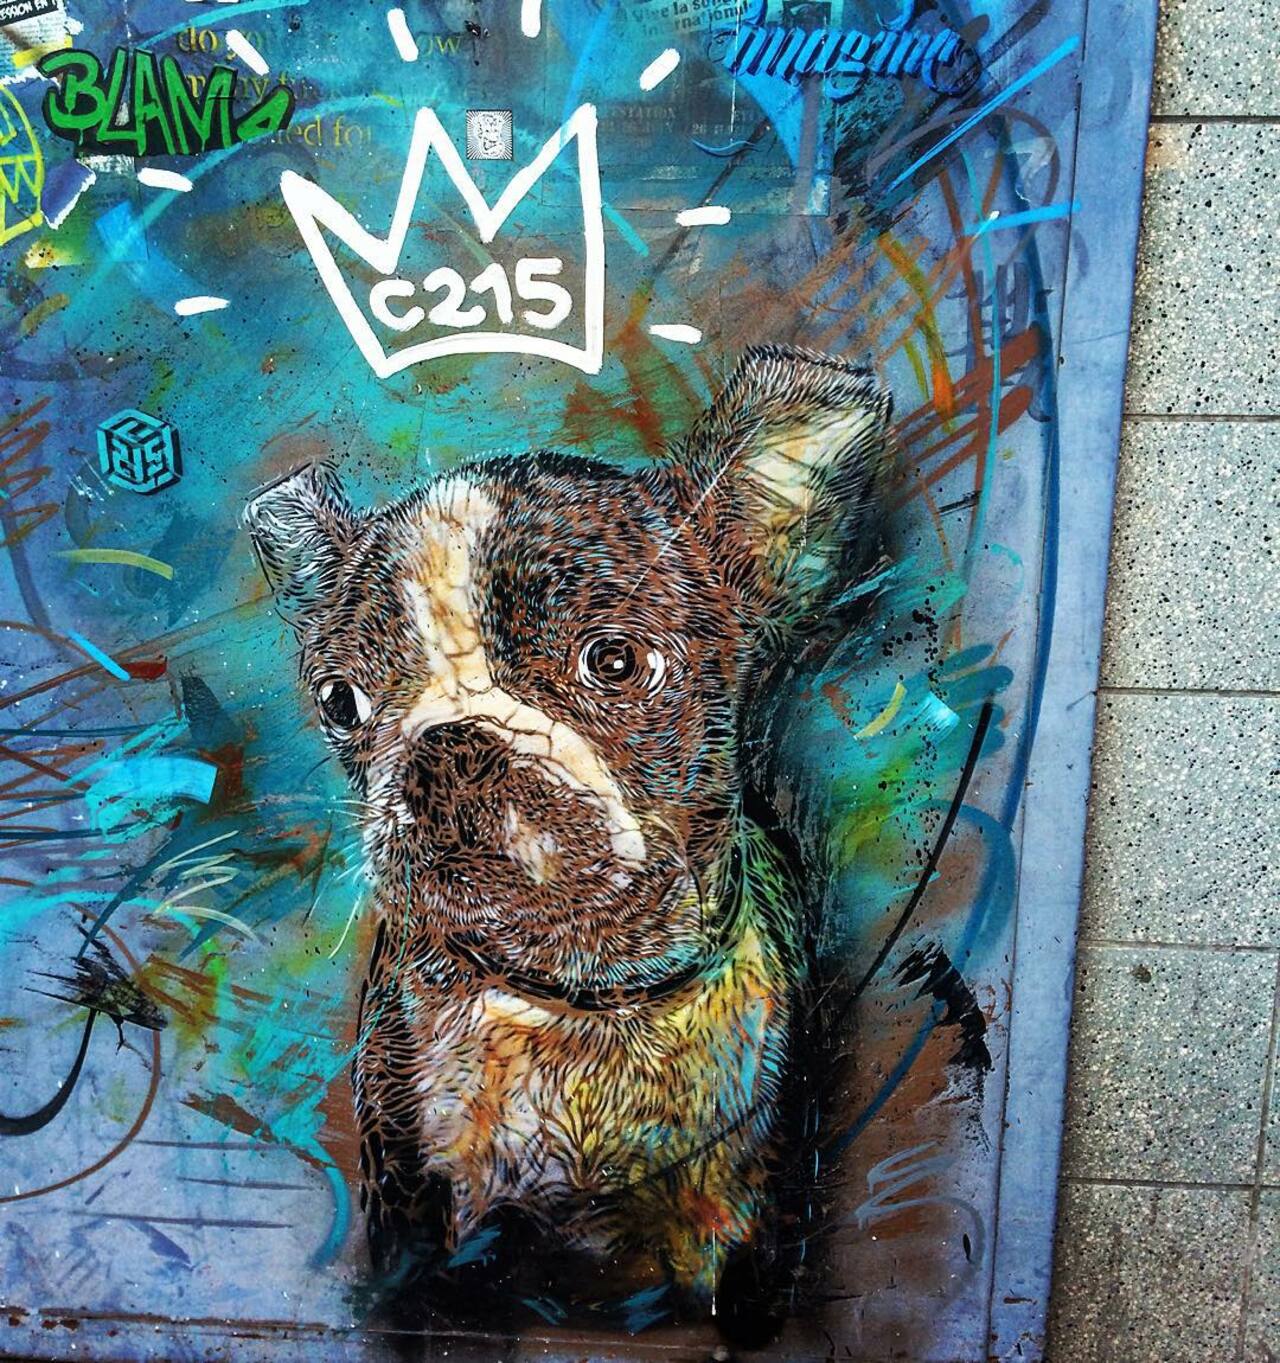 #Paris #graffiti photo by @julosteart http://ift.tt/1LPIjbI #StreetArt https://t.co/mZqqfFDRUJ